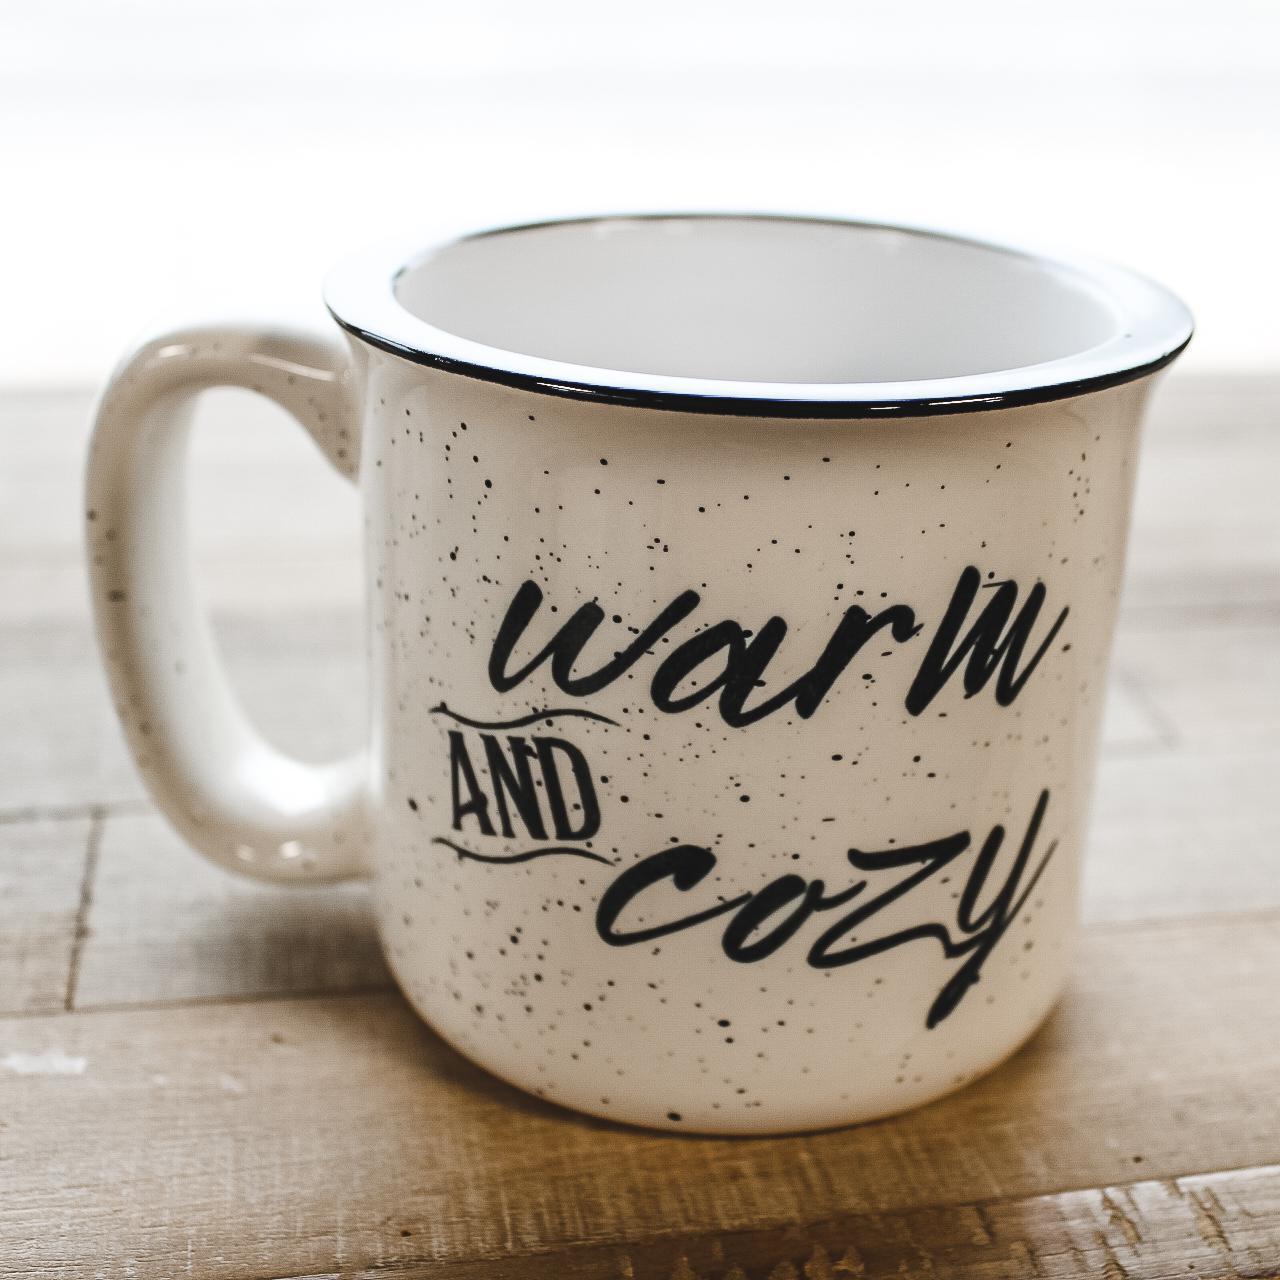 Warm & Cozy Mug